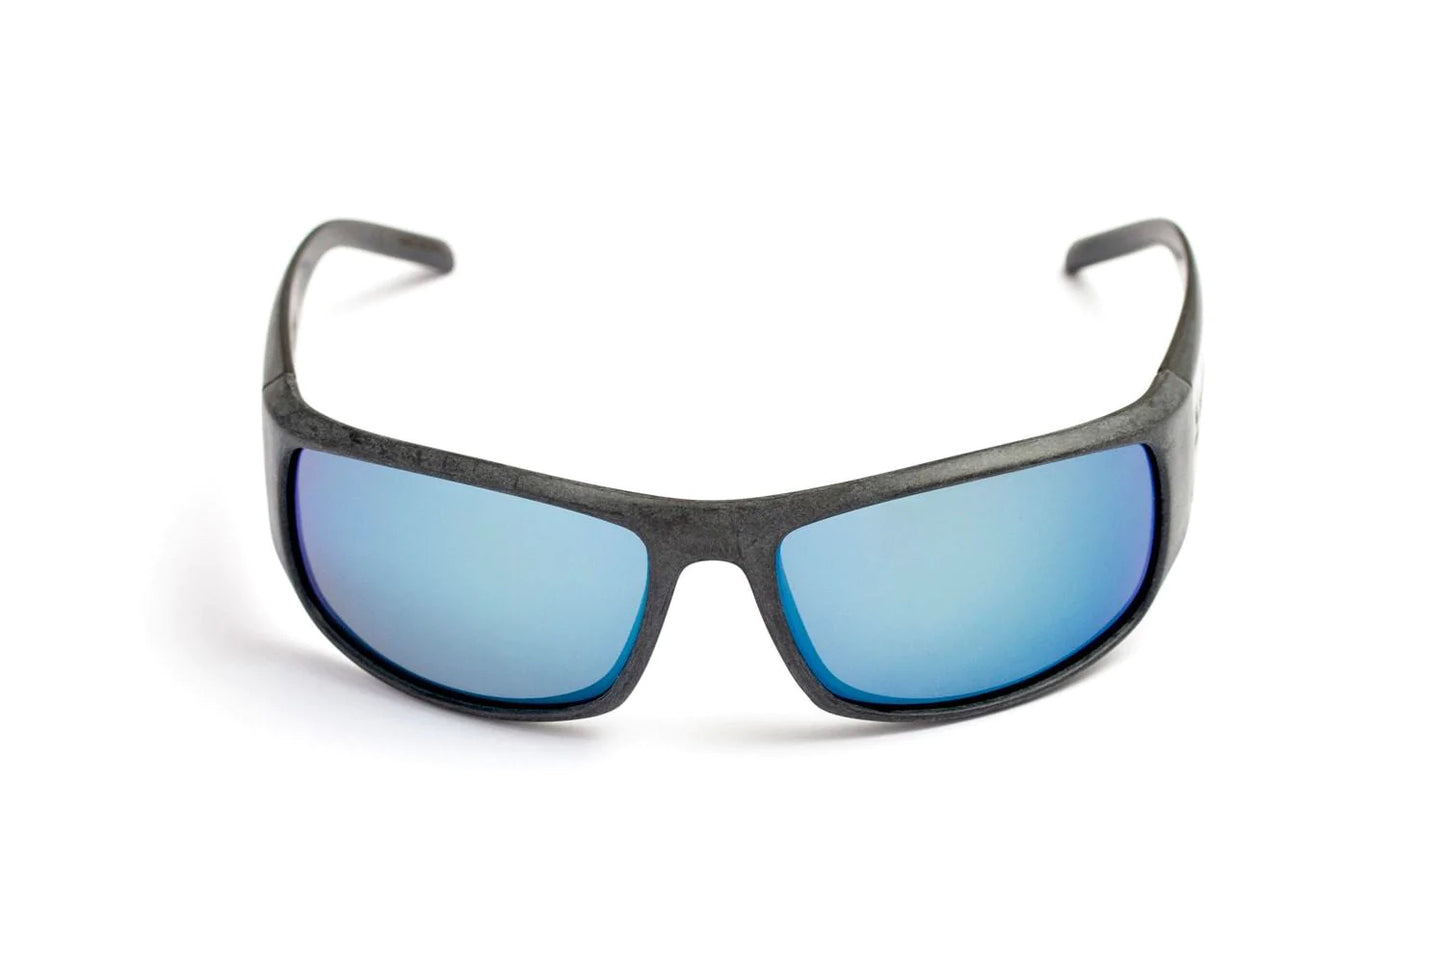 Waterhaul Zennor Recycled, Sustainable Sunglasses